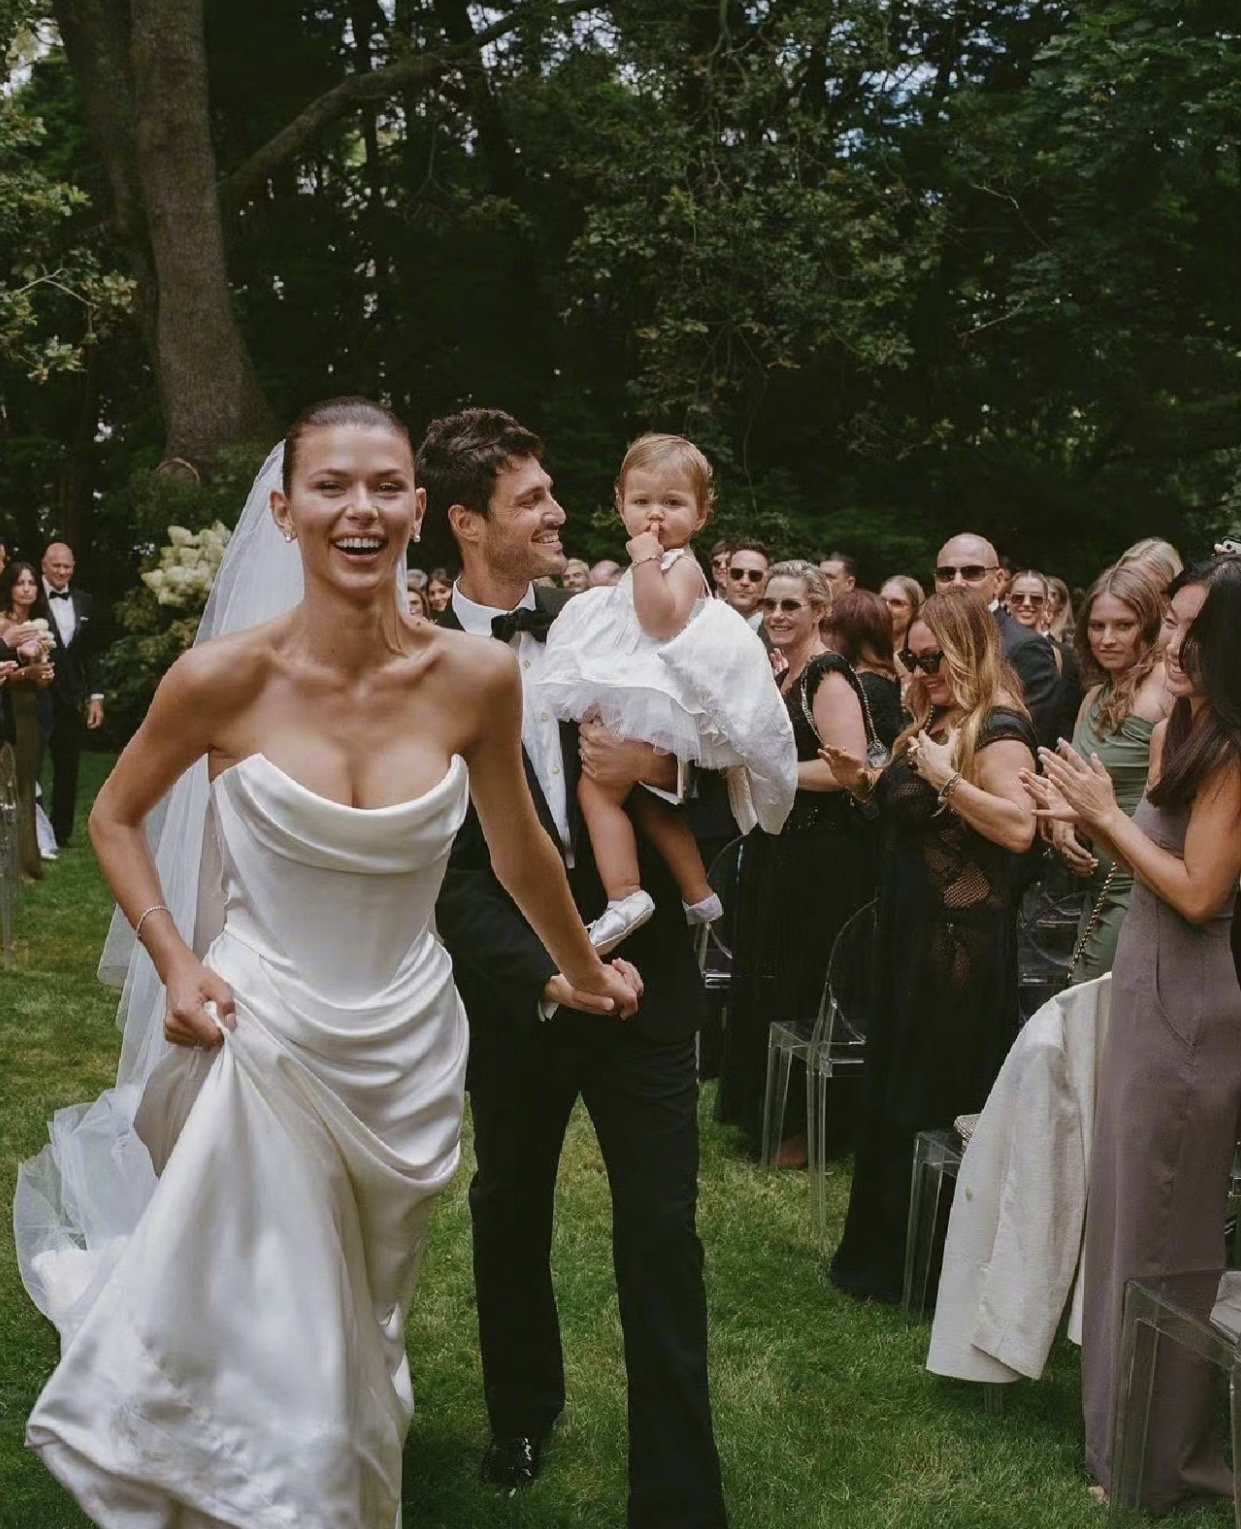 Sue Corset, Wedding Corset, Custom Bridal Top, Bridal Separates Top 